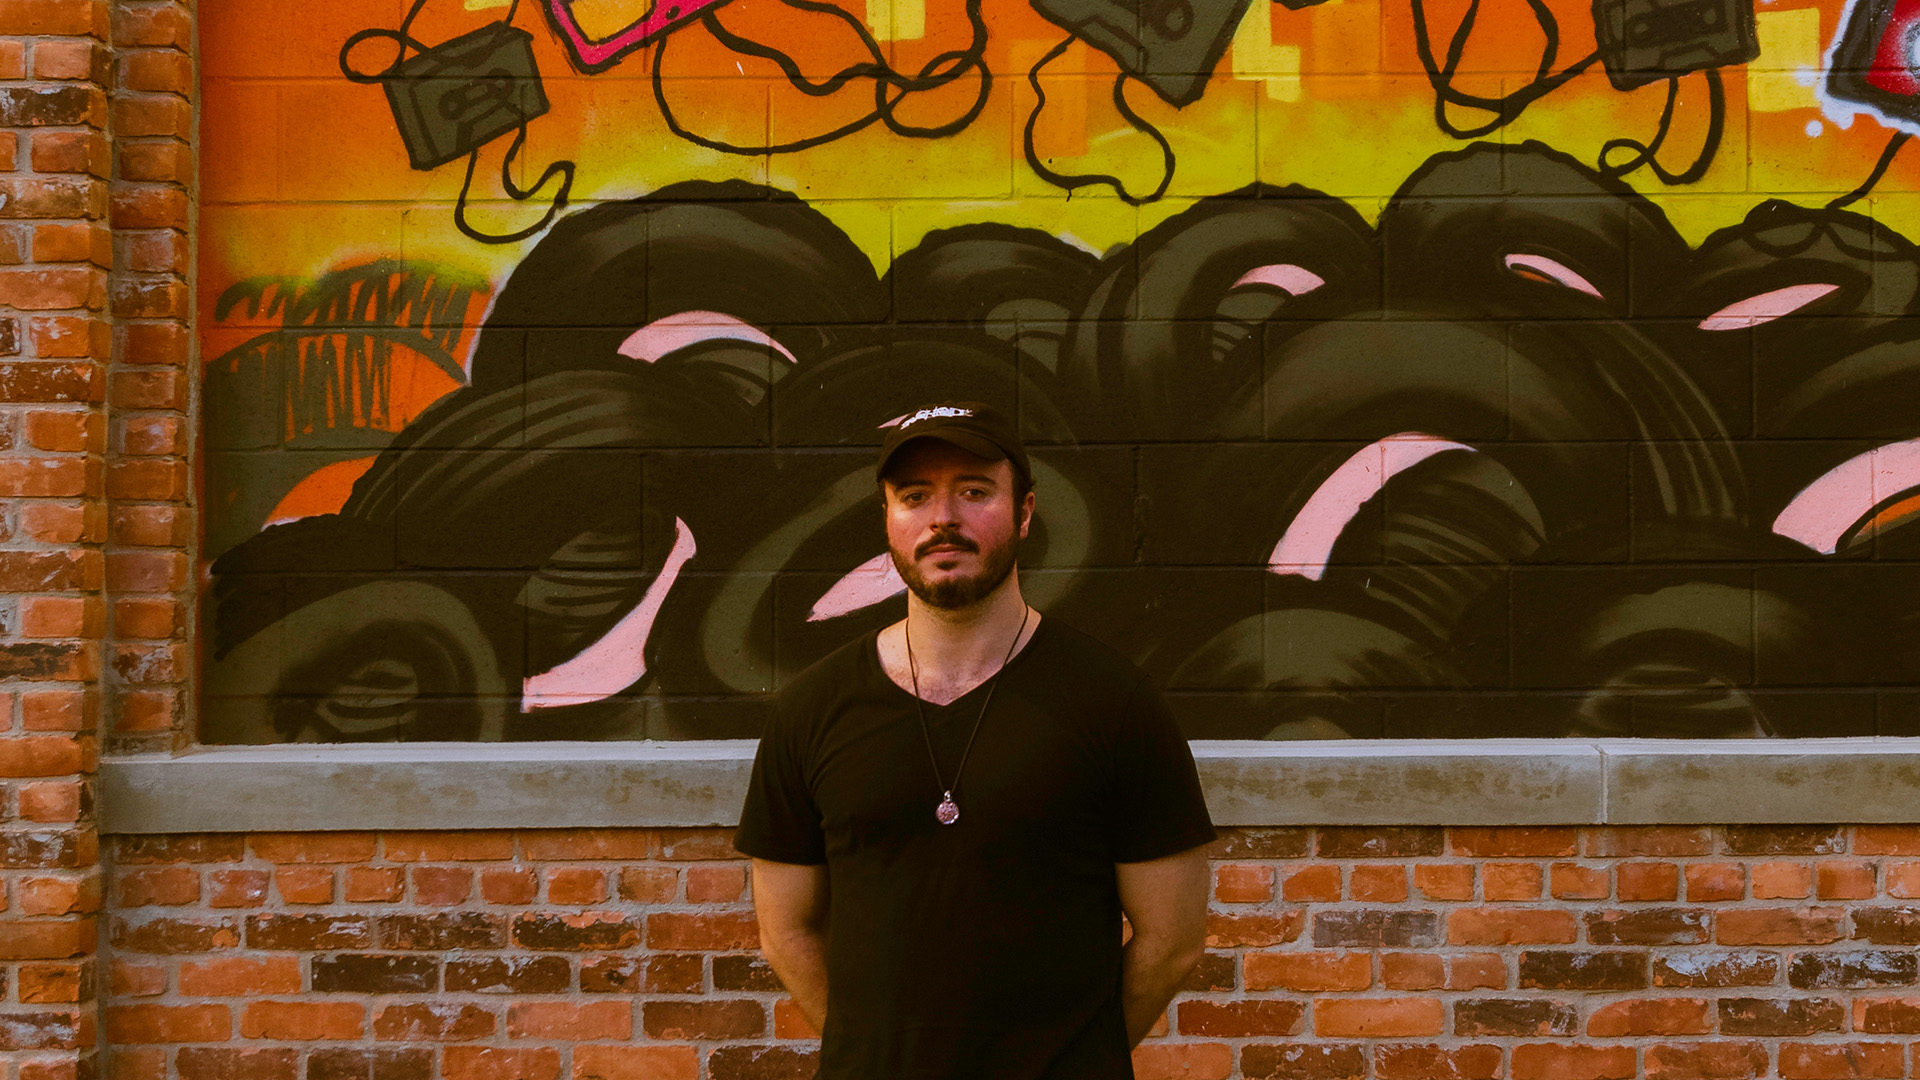 Evan standing in front of a street-art backdrop